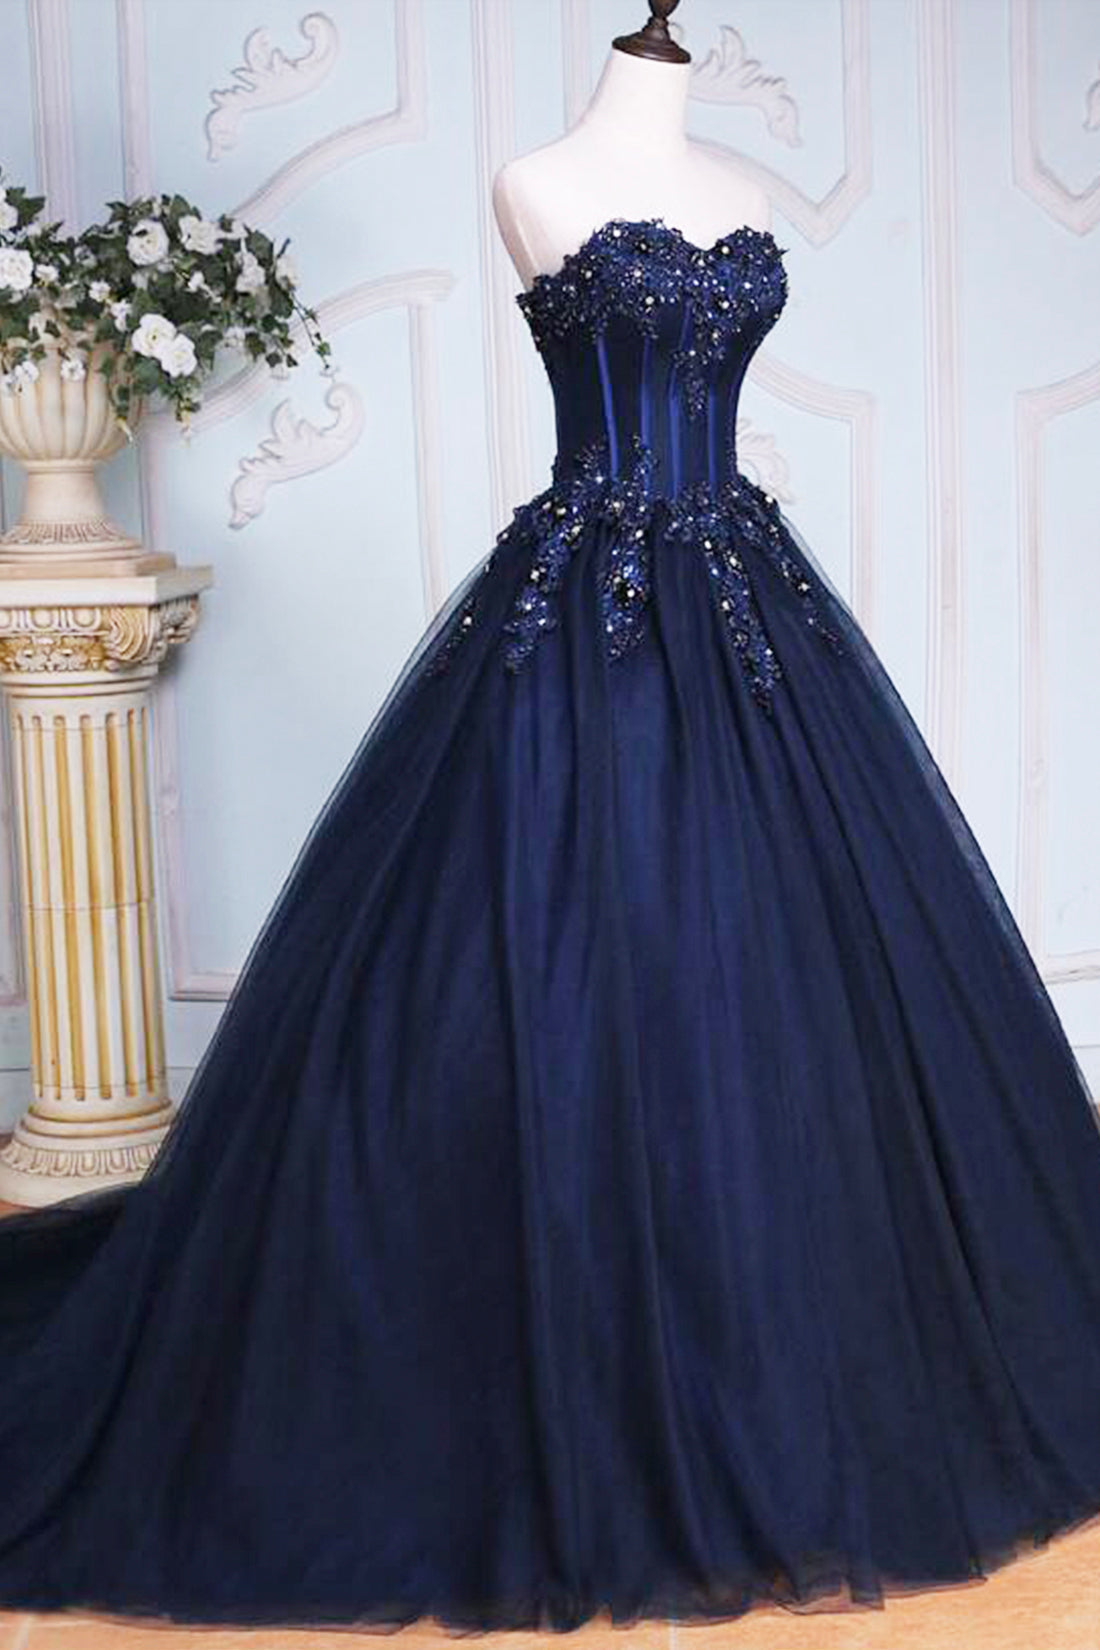 Bridesmaid Dresses Chiffon, Dark Blue Tulle Lace Princess Dress, A-Line Strapless Long Prom Dress